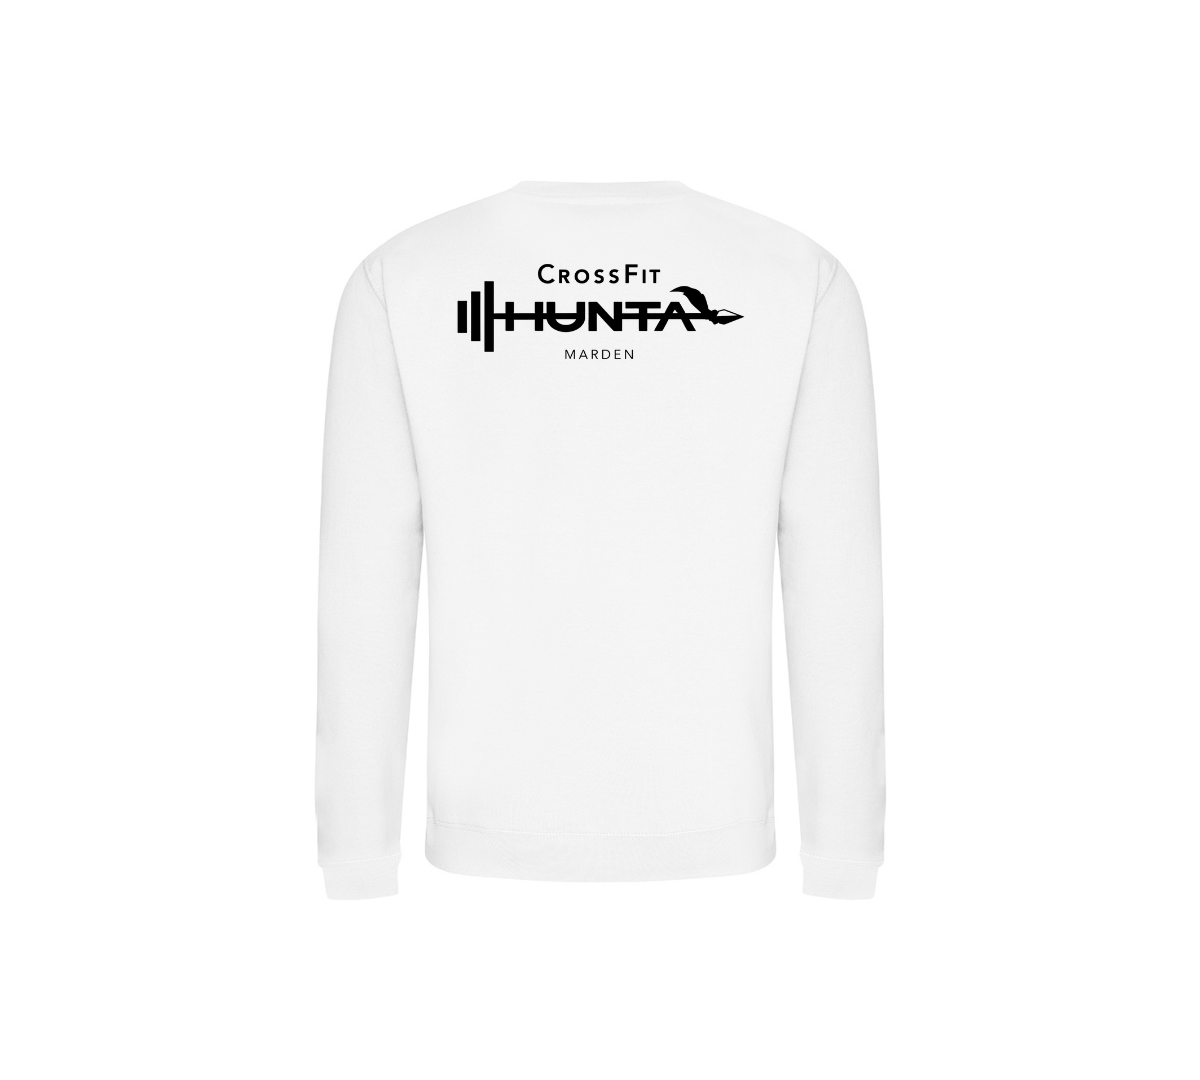 CrossFit Hunta Sweater